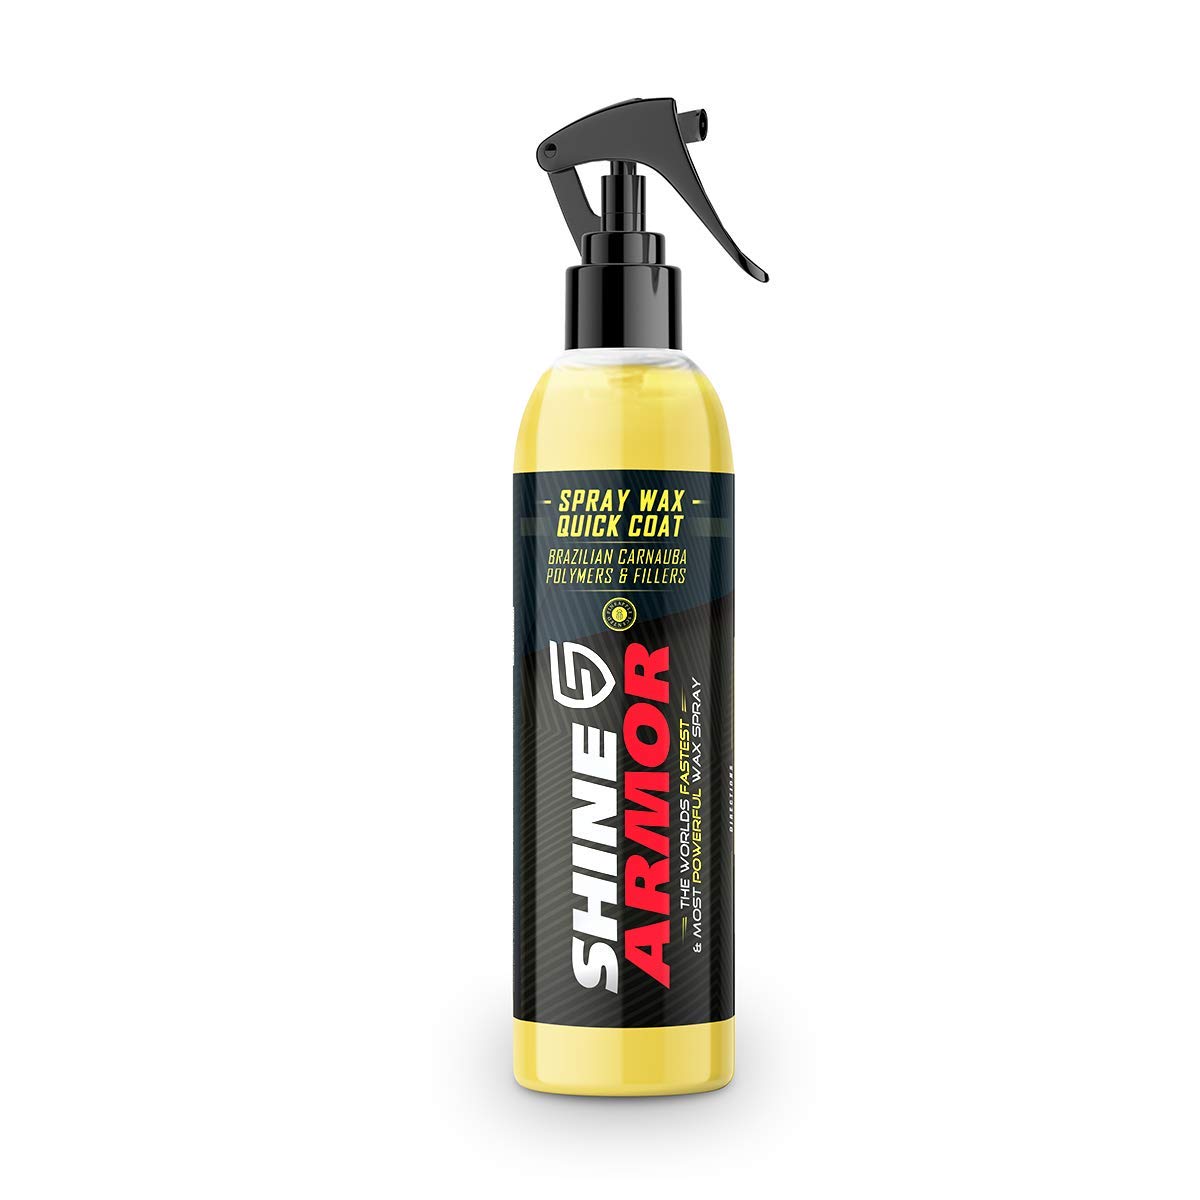 Shine Armor Car Wax Hydrophobic Spray - Spray Wax for Car with Carnauba Wax - Car Polish and Car Shine Spray - Spray Wax Car Sealant and Paint Protection - Fast Acting Car Wax Spray